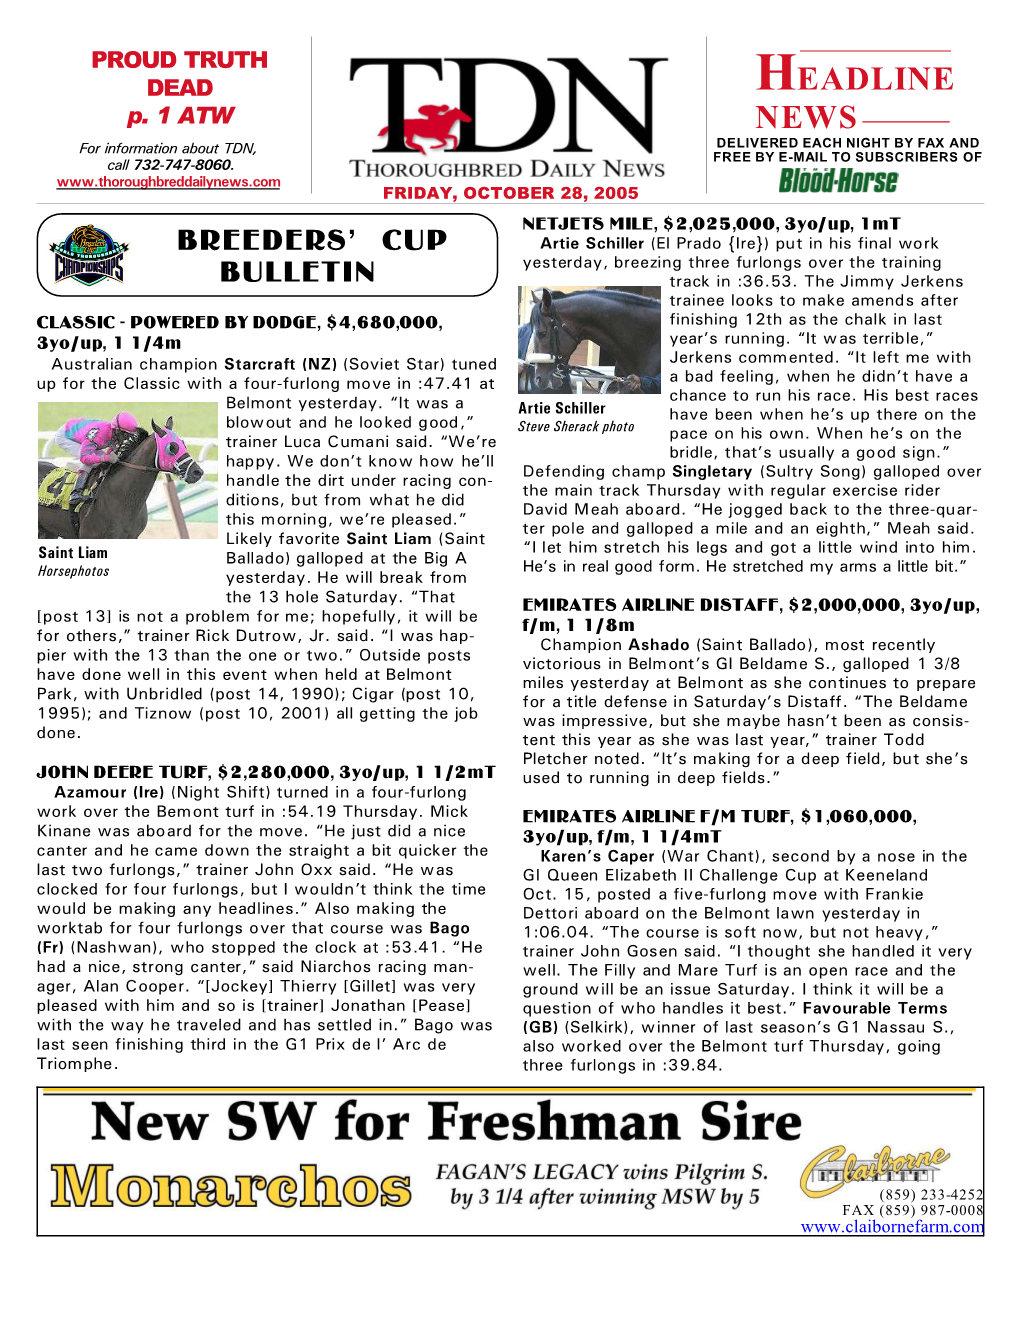 HEADLINE NEWS • 10/28/05 • PAGE 2 of 4